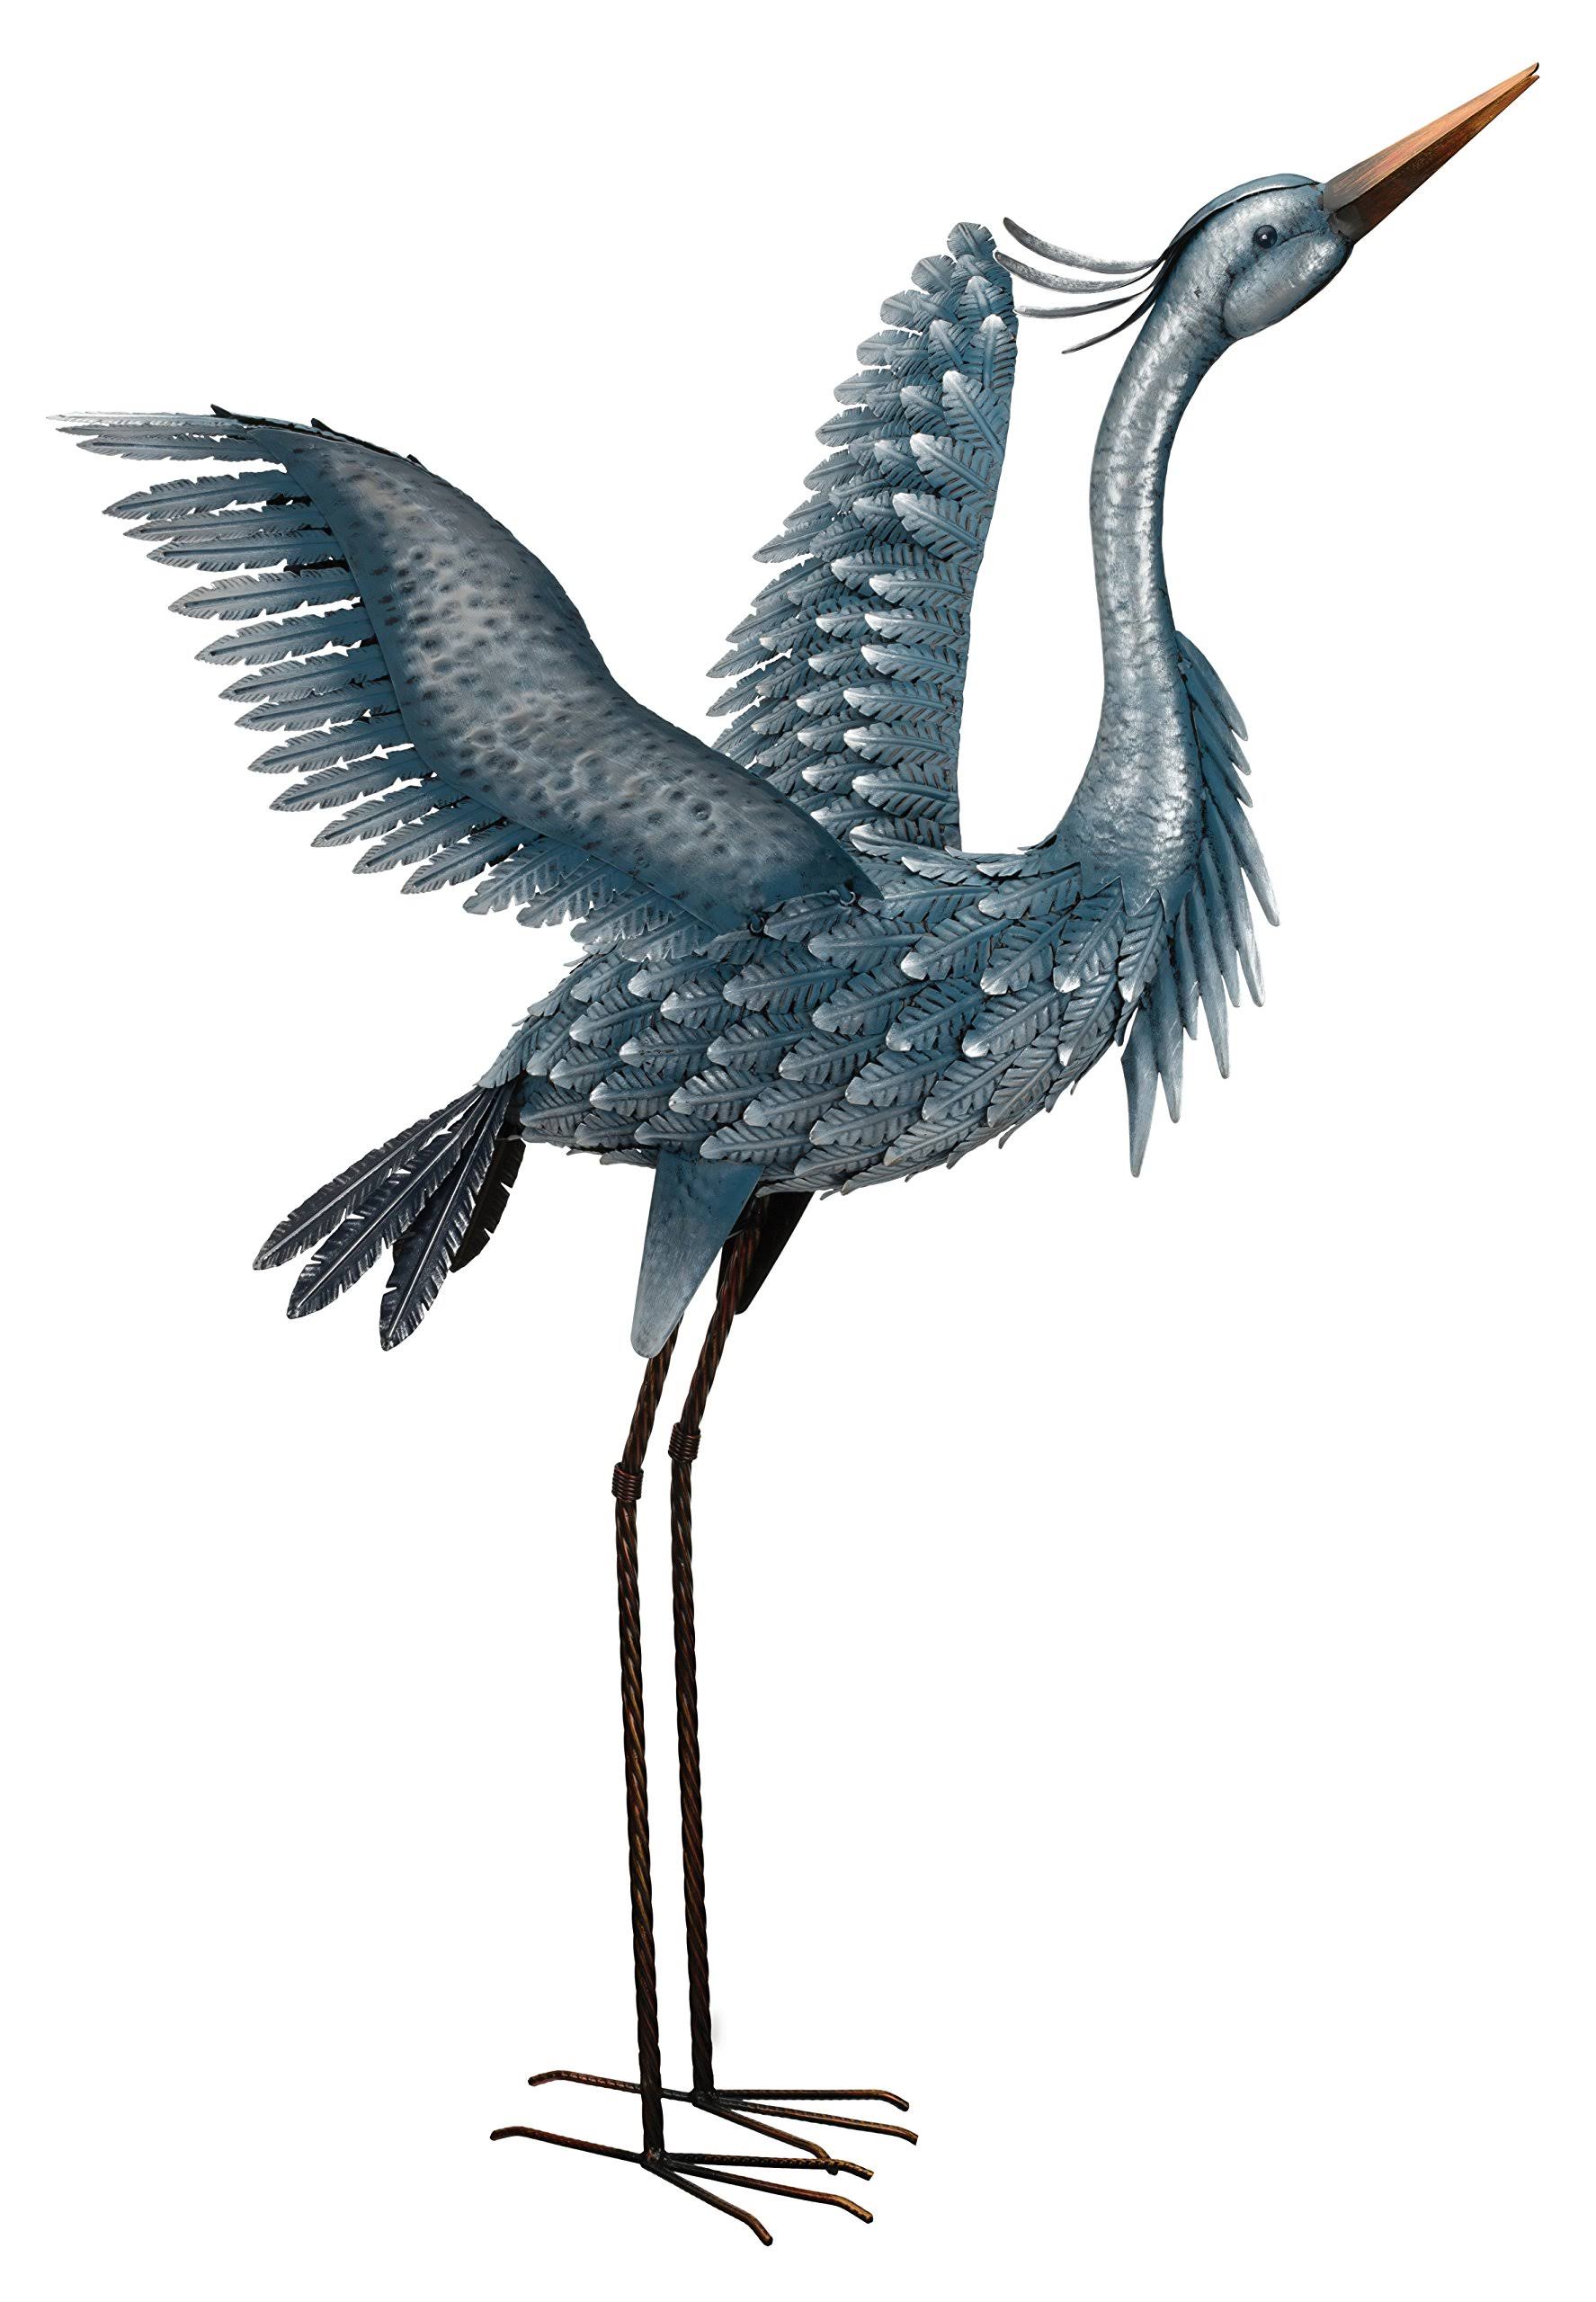 Regal Metallic Blue Heron-Wings Up Bird Statuary - 47"